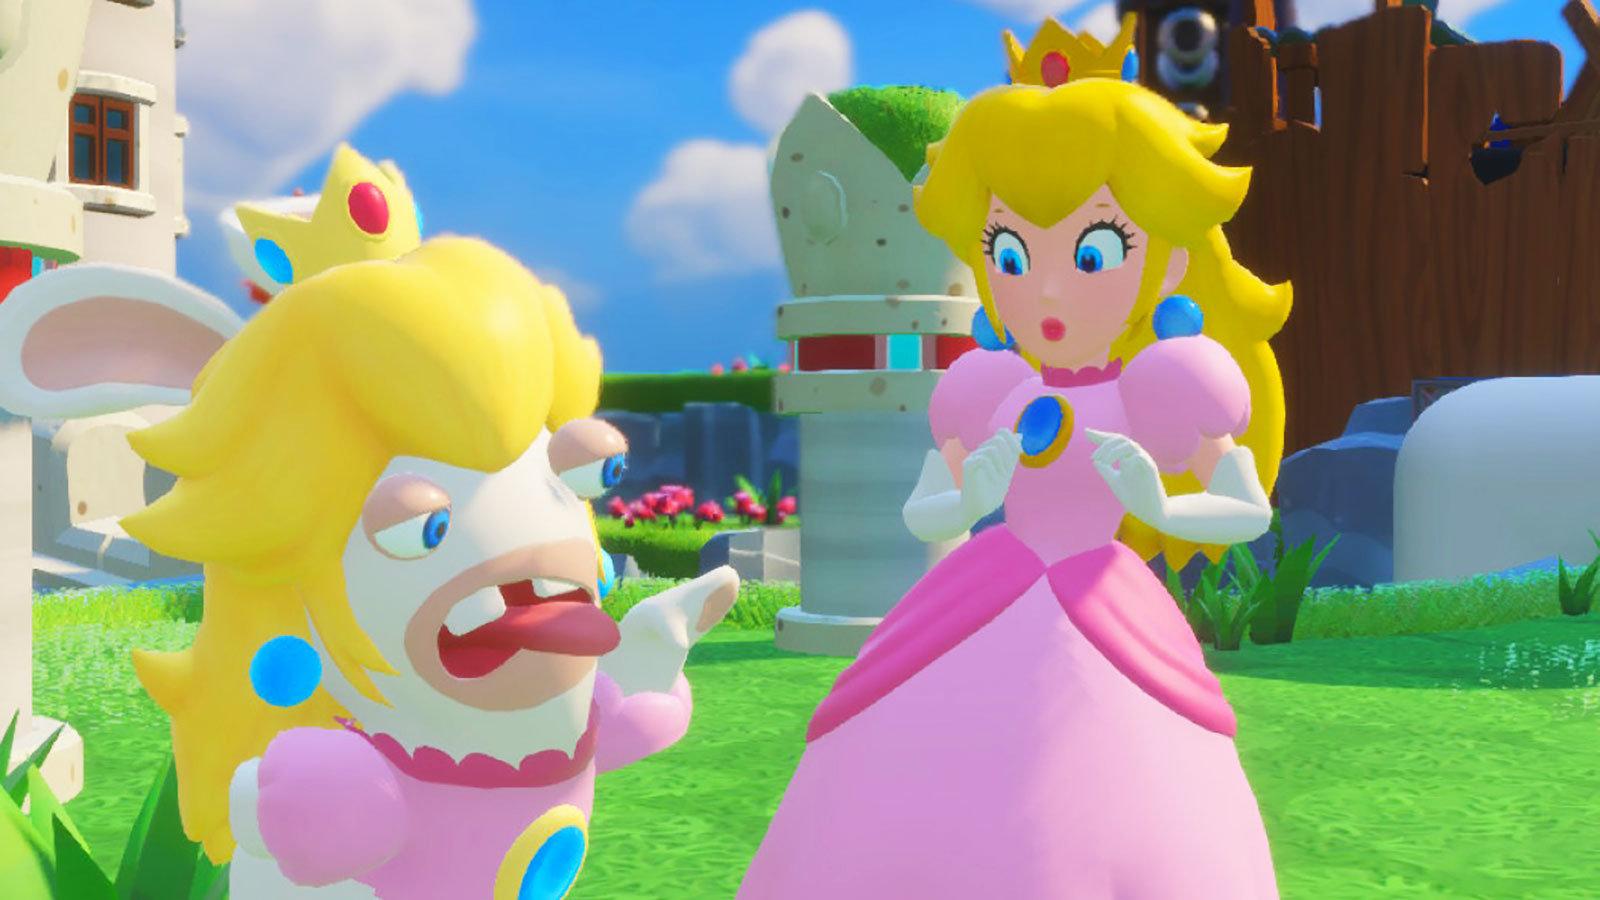 Mario + Rabbids: Kingdom Battle' tempers insanity with charm